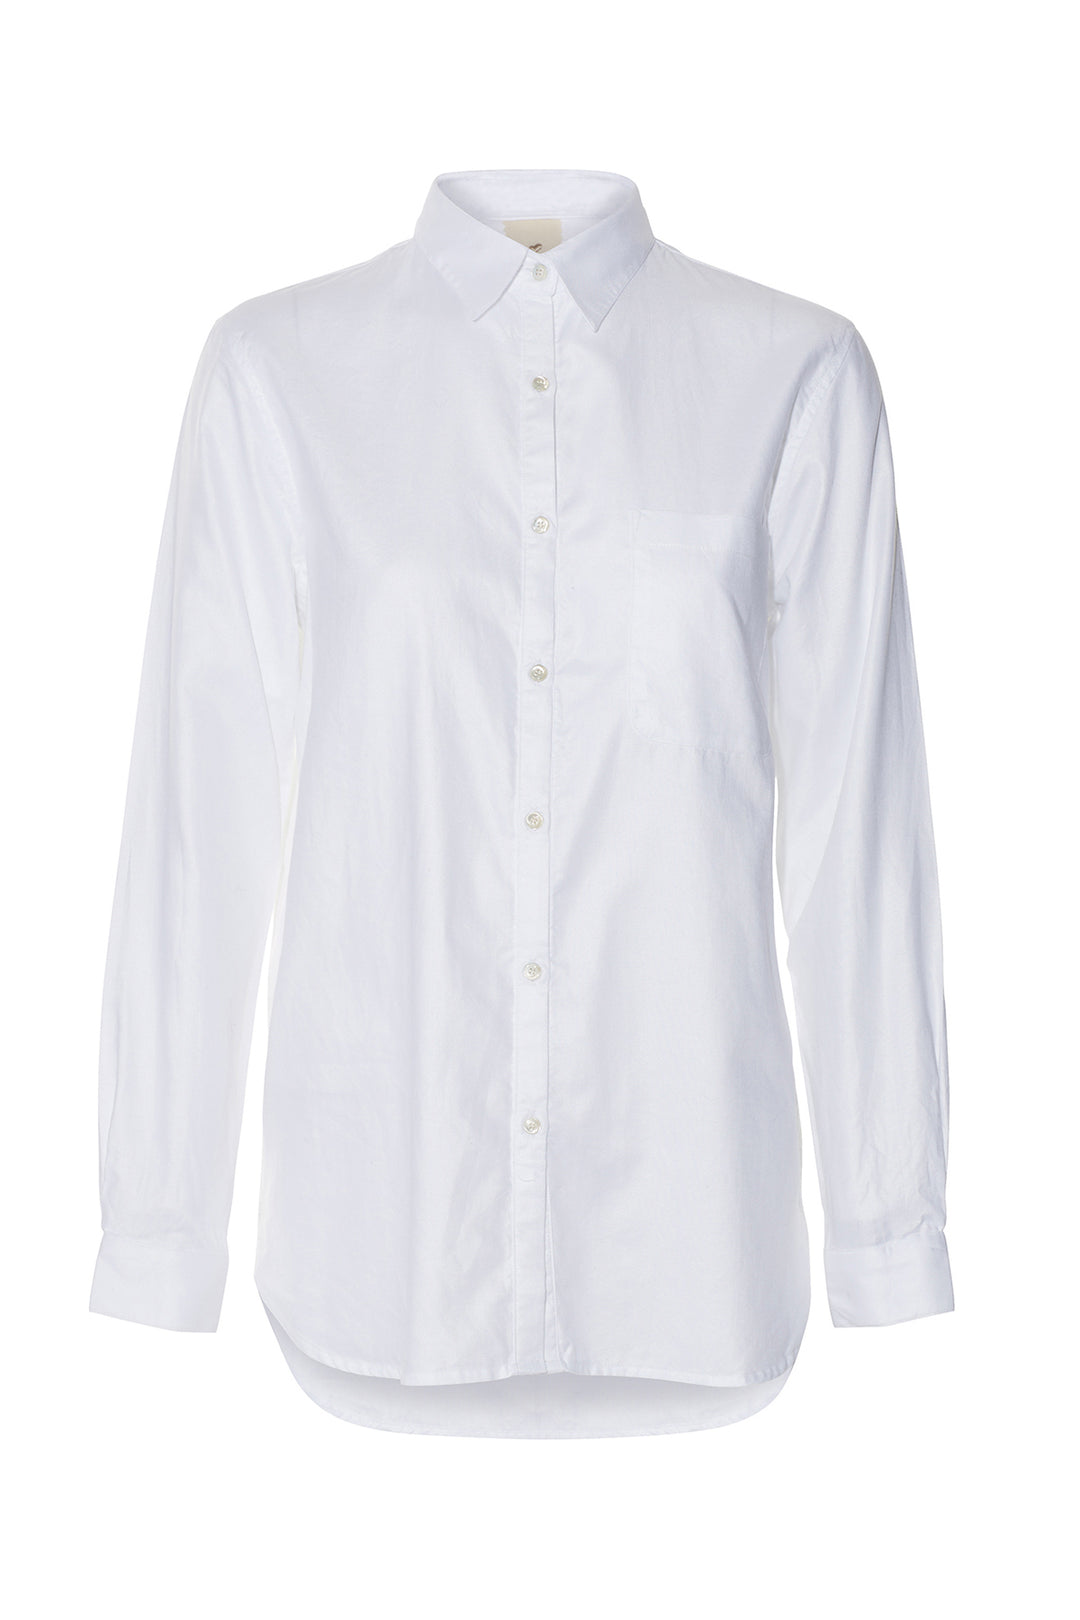 Heartmade Marlis shirt HM SHIRTS 01 White